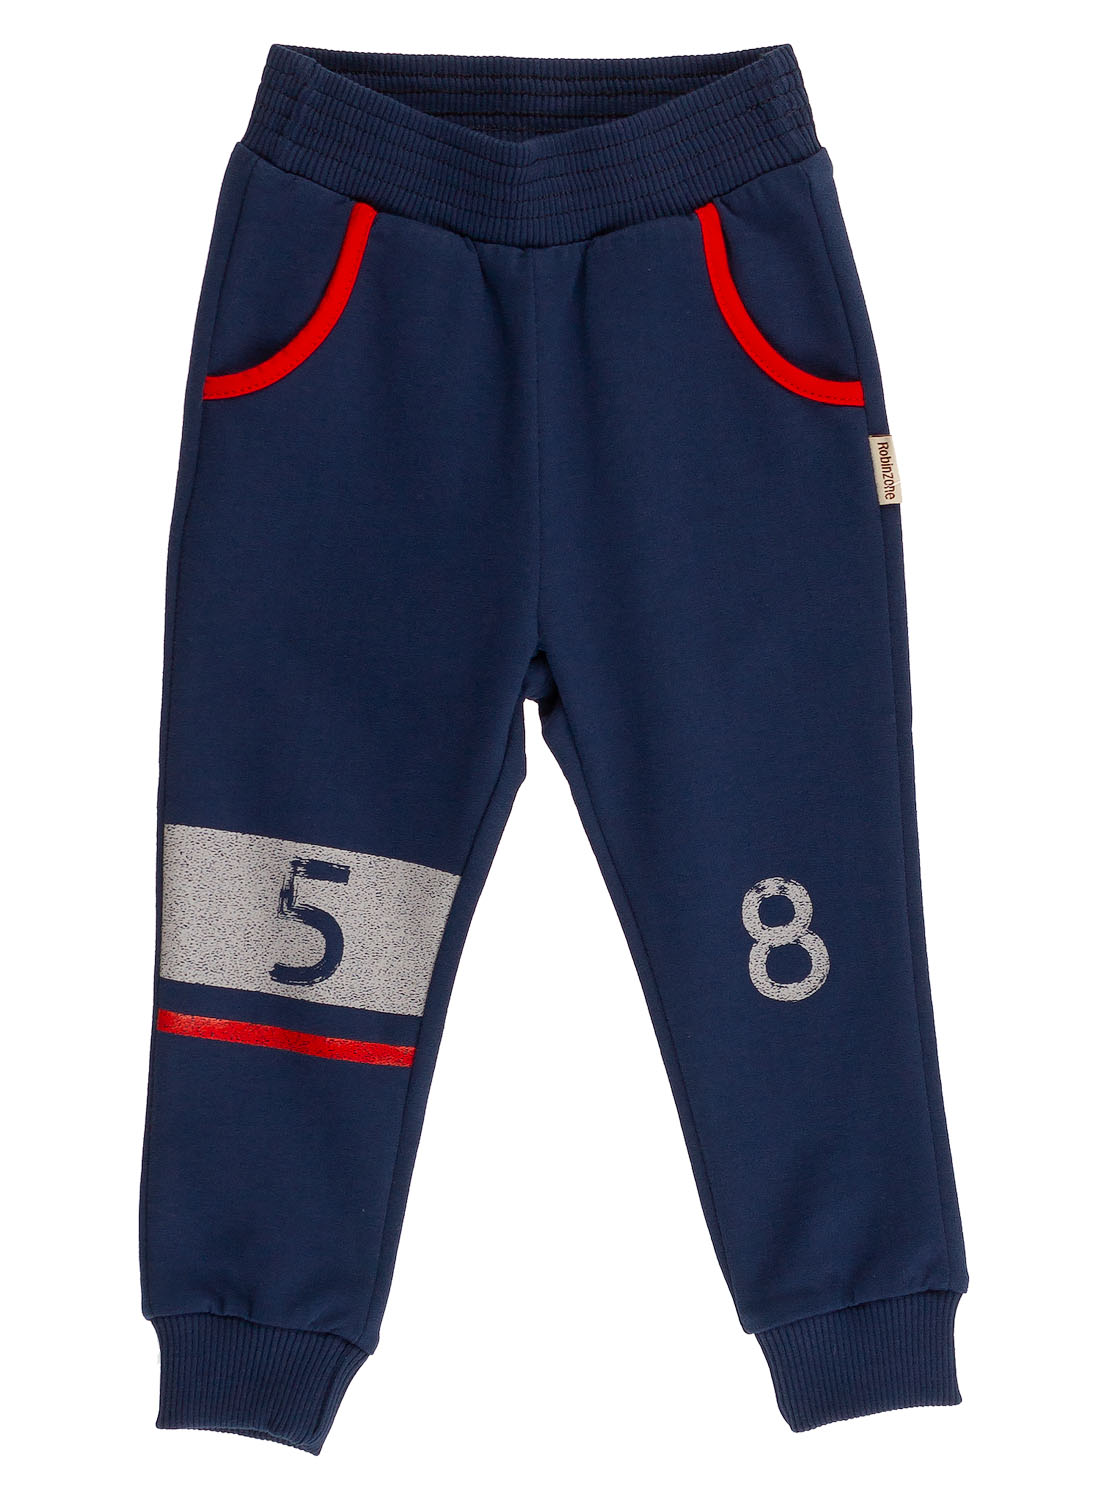 Спортивные штаны для мальчика Robinzone темно-синие ШТ-213 - ціна